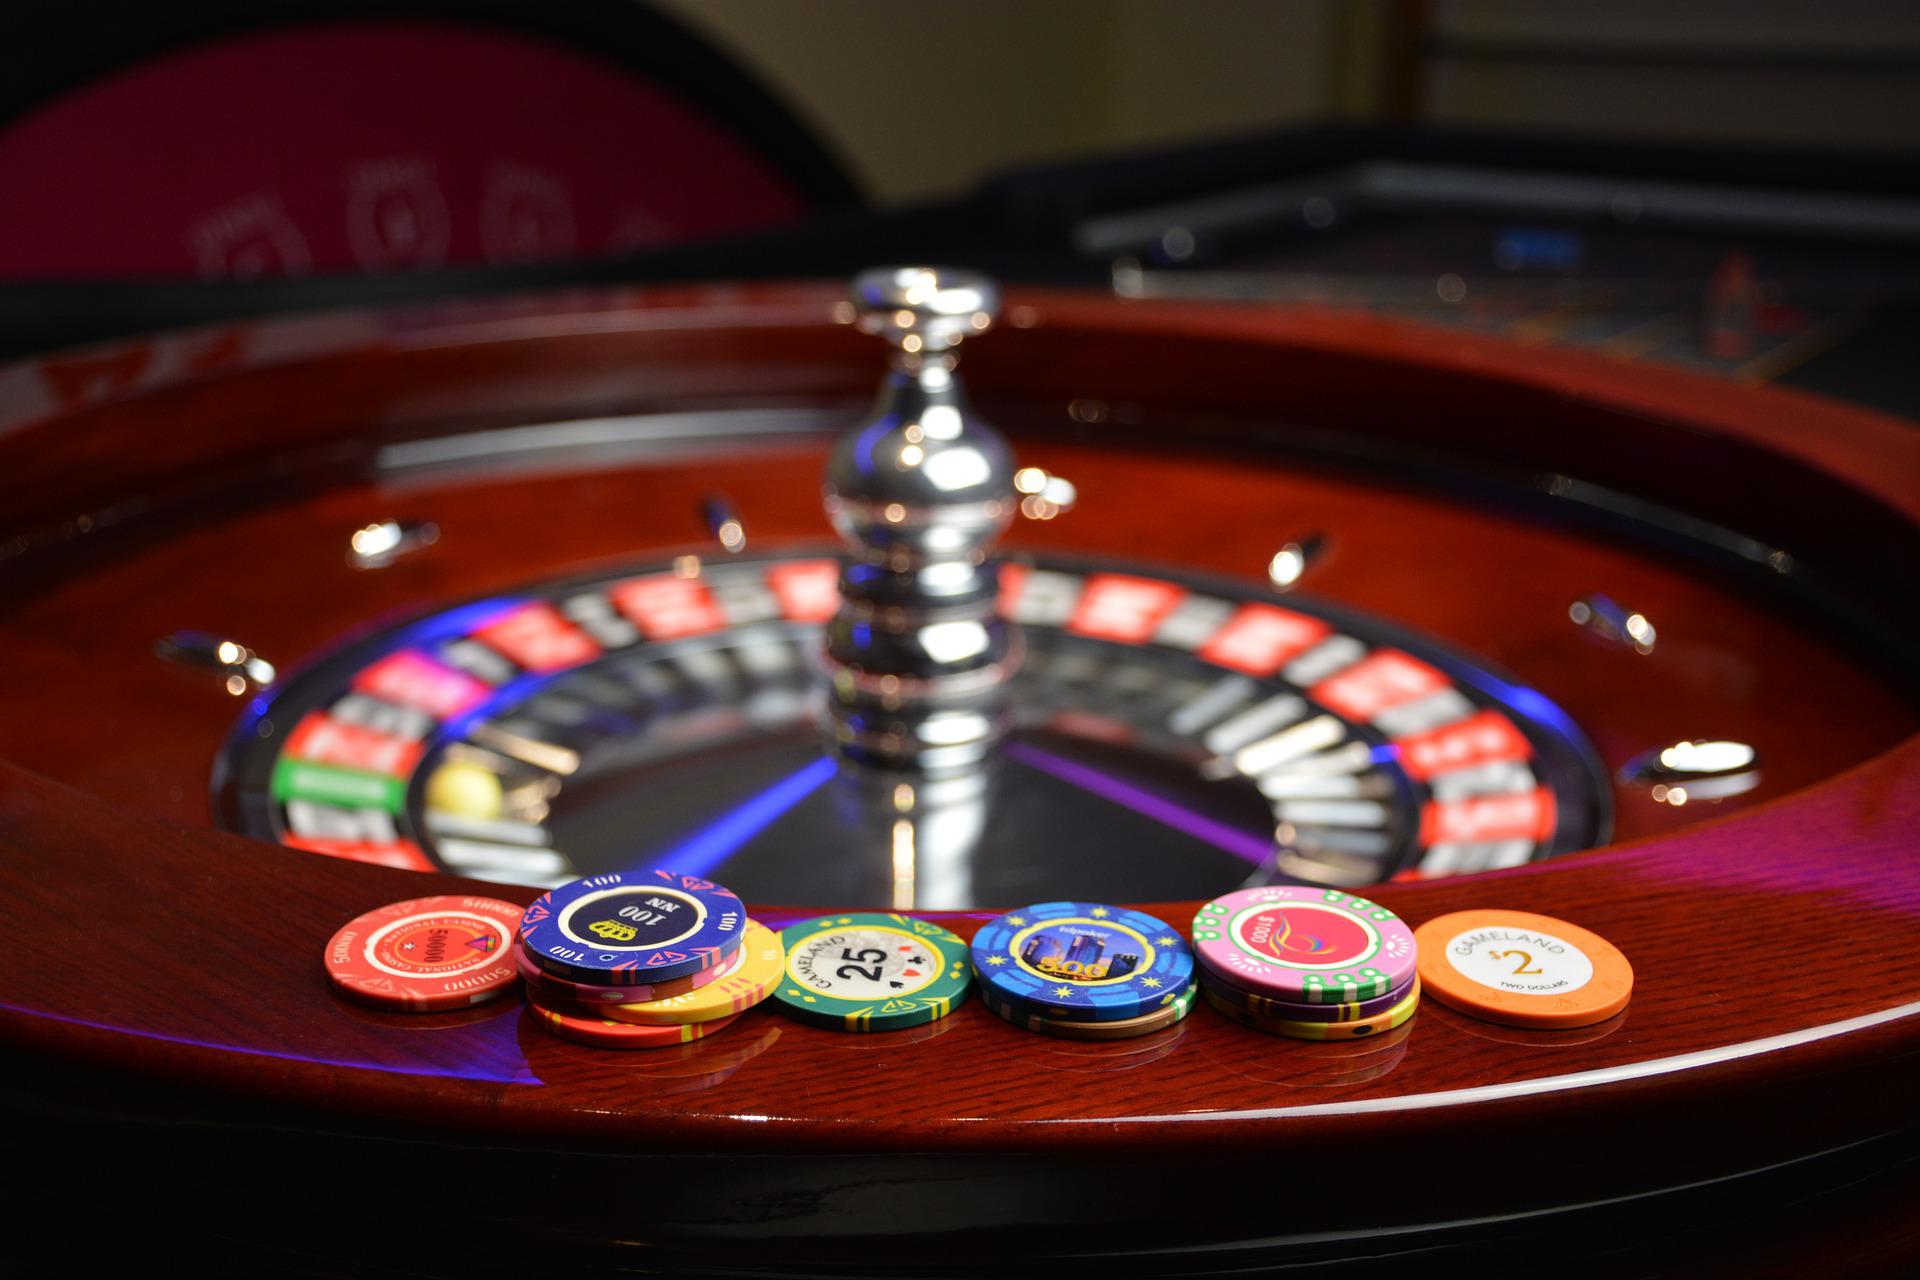 tactics to win at online casinos